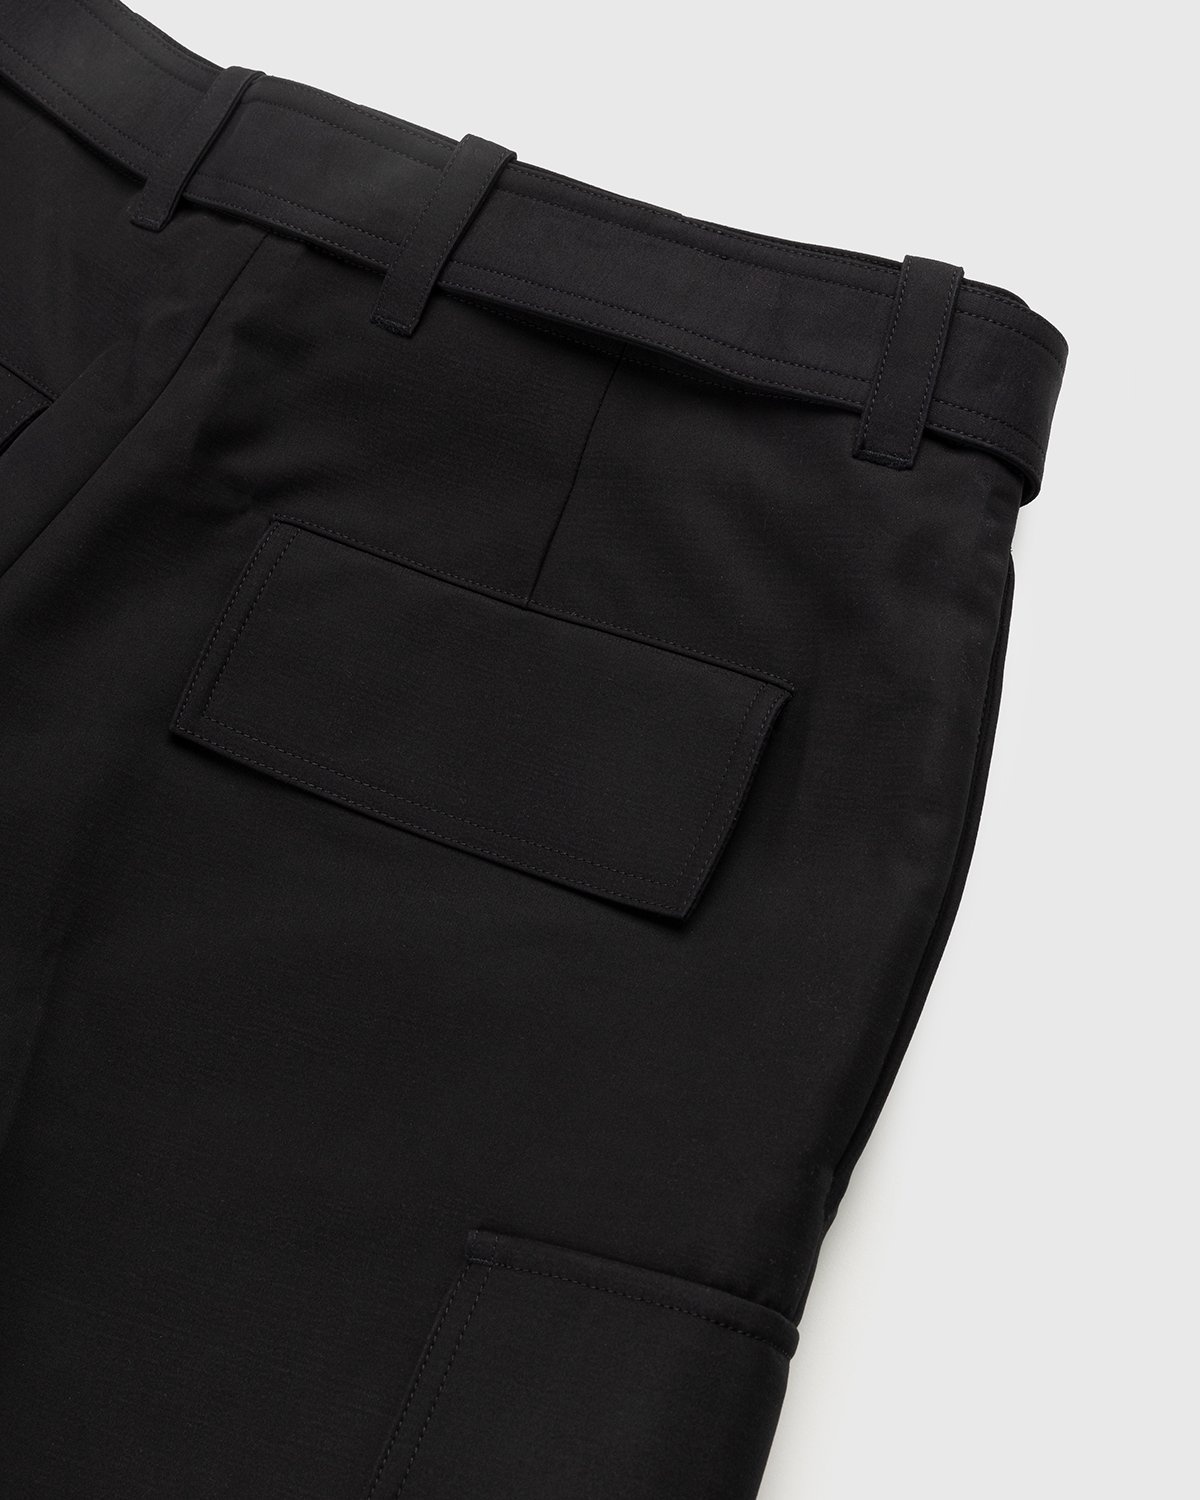 Jil Sander – Cotton Cargo Shorts Black - Cargo Shorts - Black - Image 4